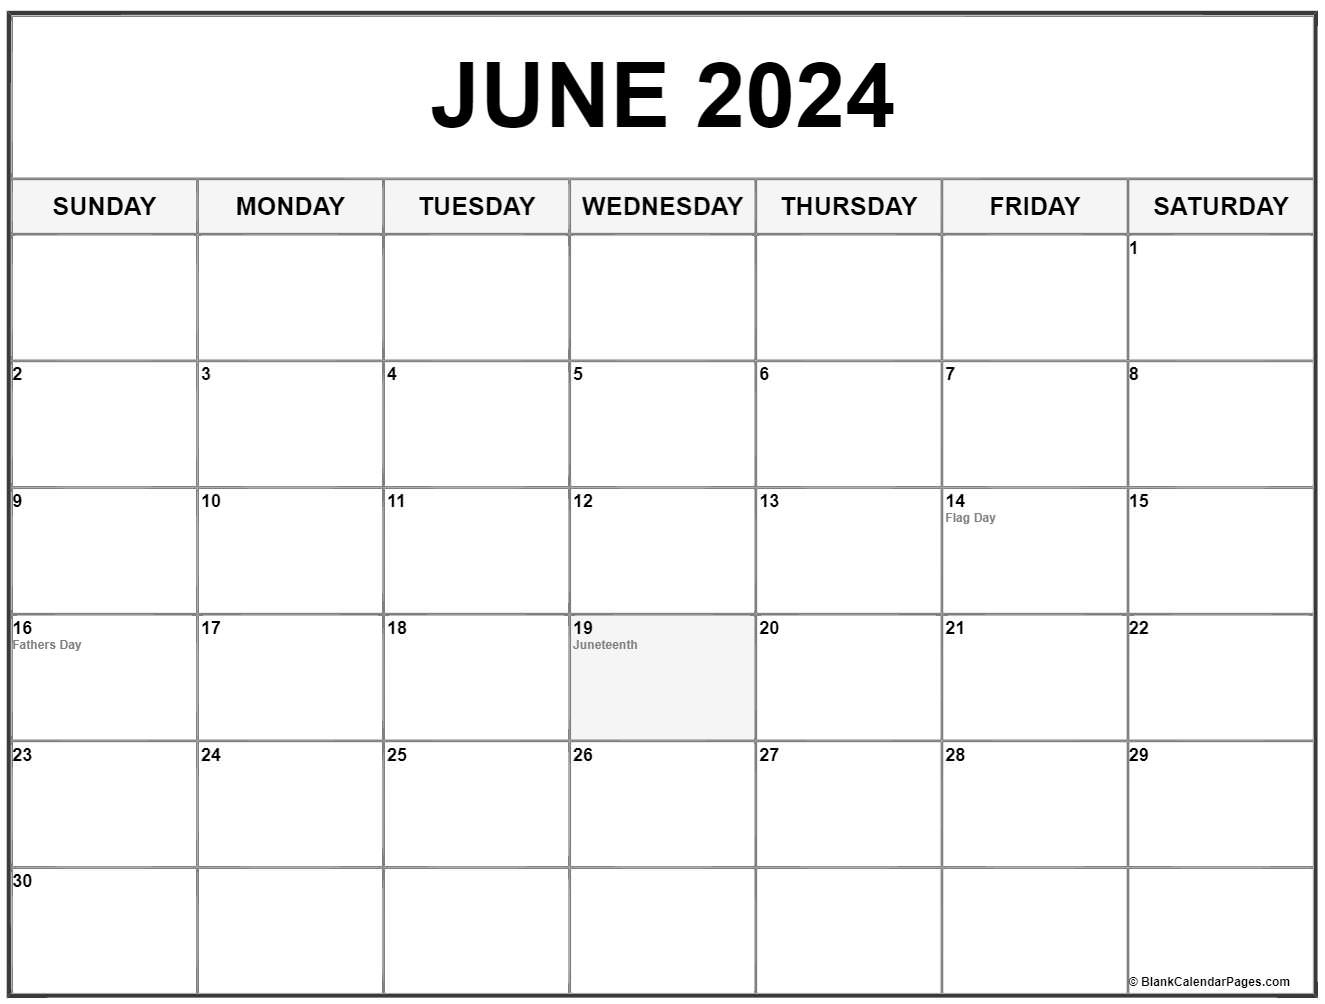 June 2024 With Holidays Calendar inside June 2024 Holidays Calendar